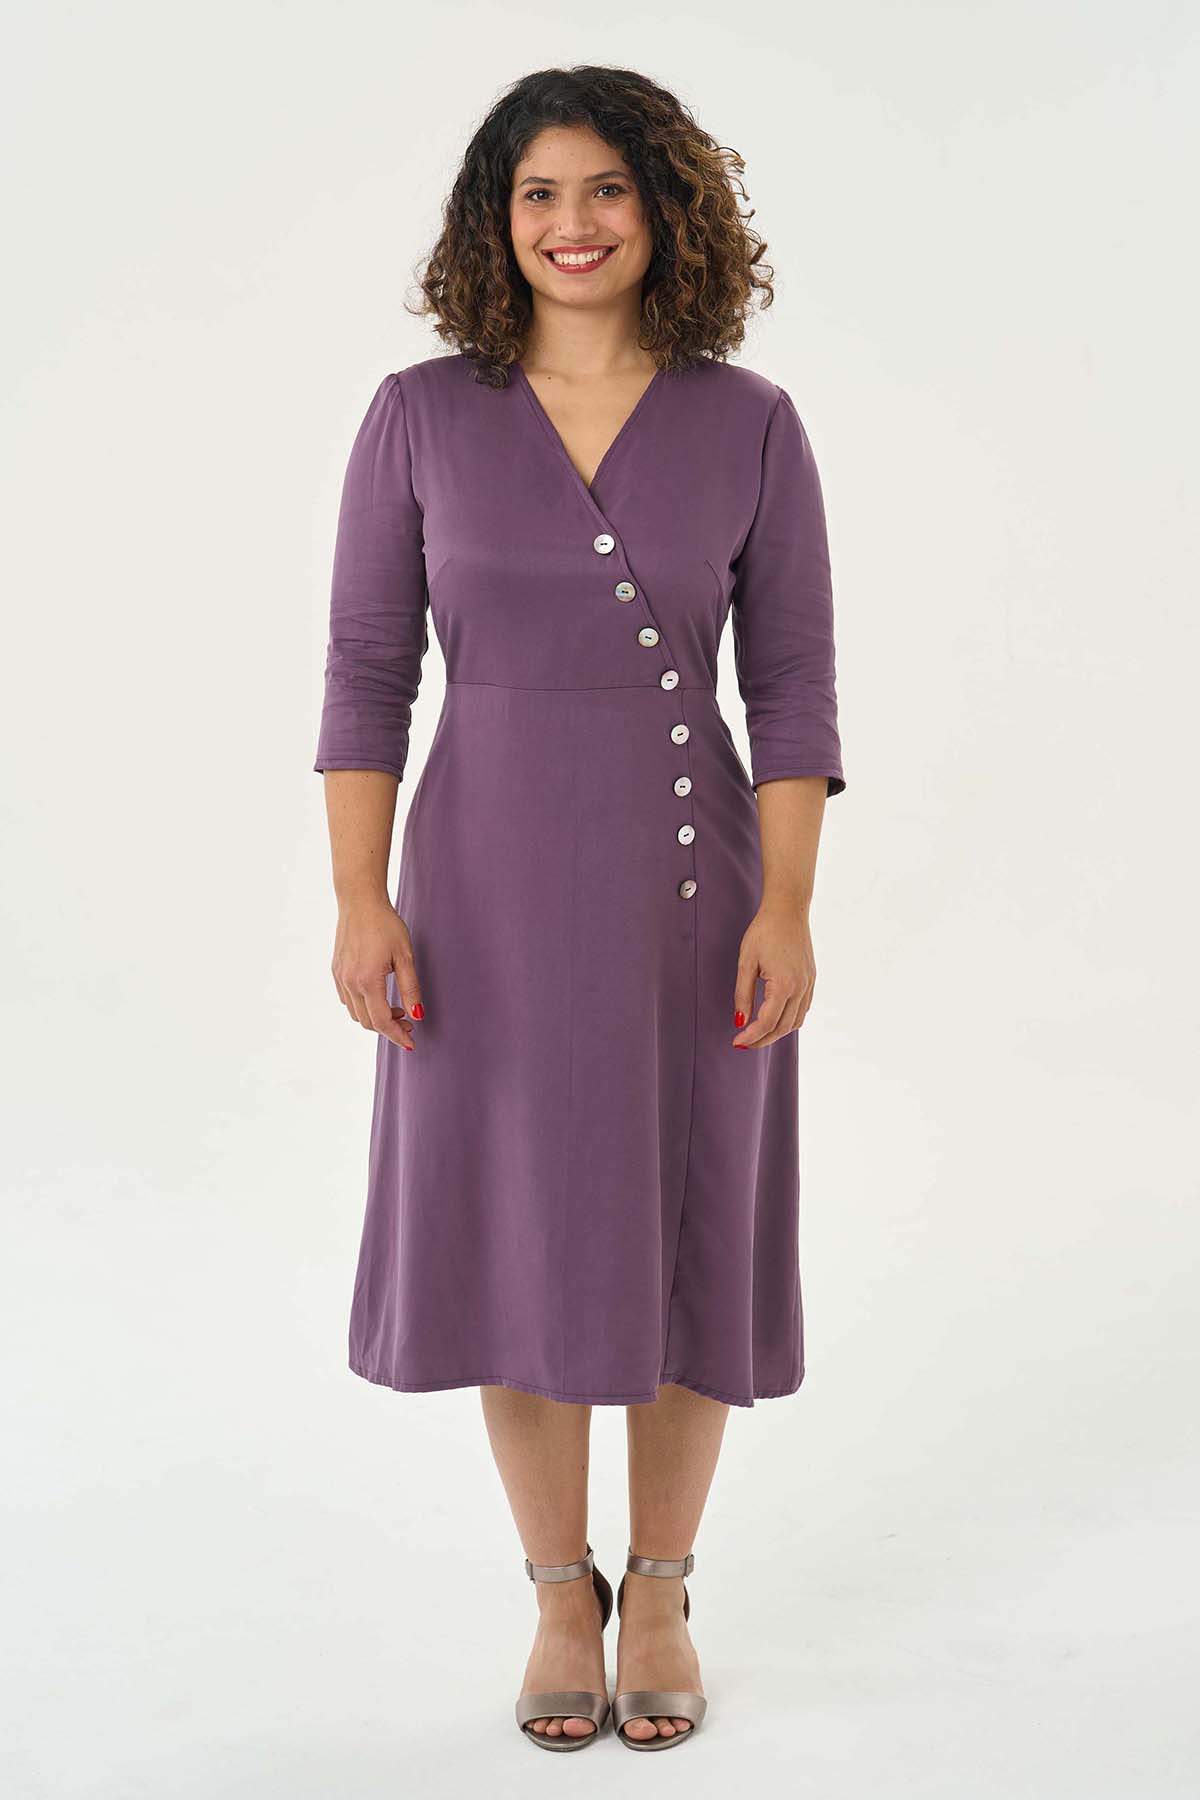 Sew Over It - Pippa Dress